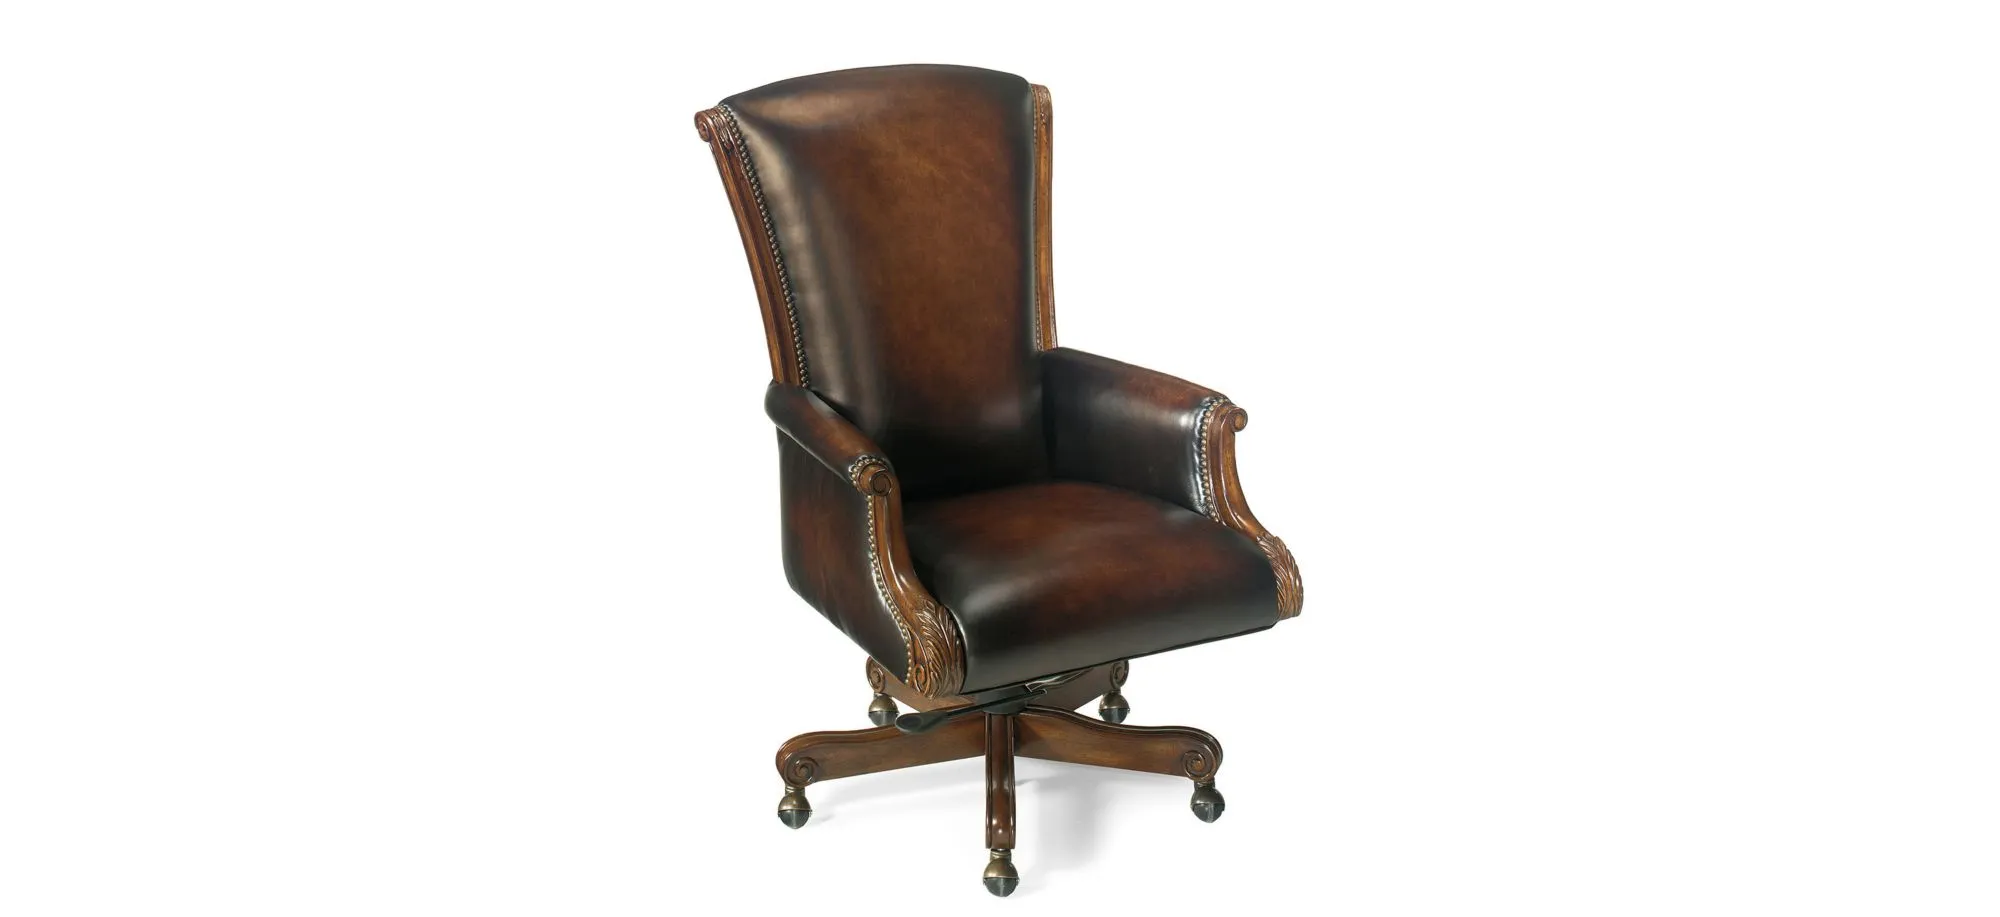 Samuel Executive Swivel Tilt Chair in Brown by Hooker Furniture